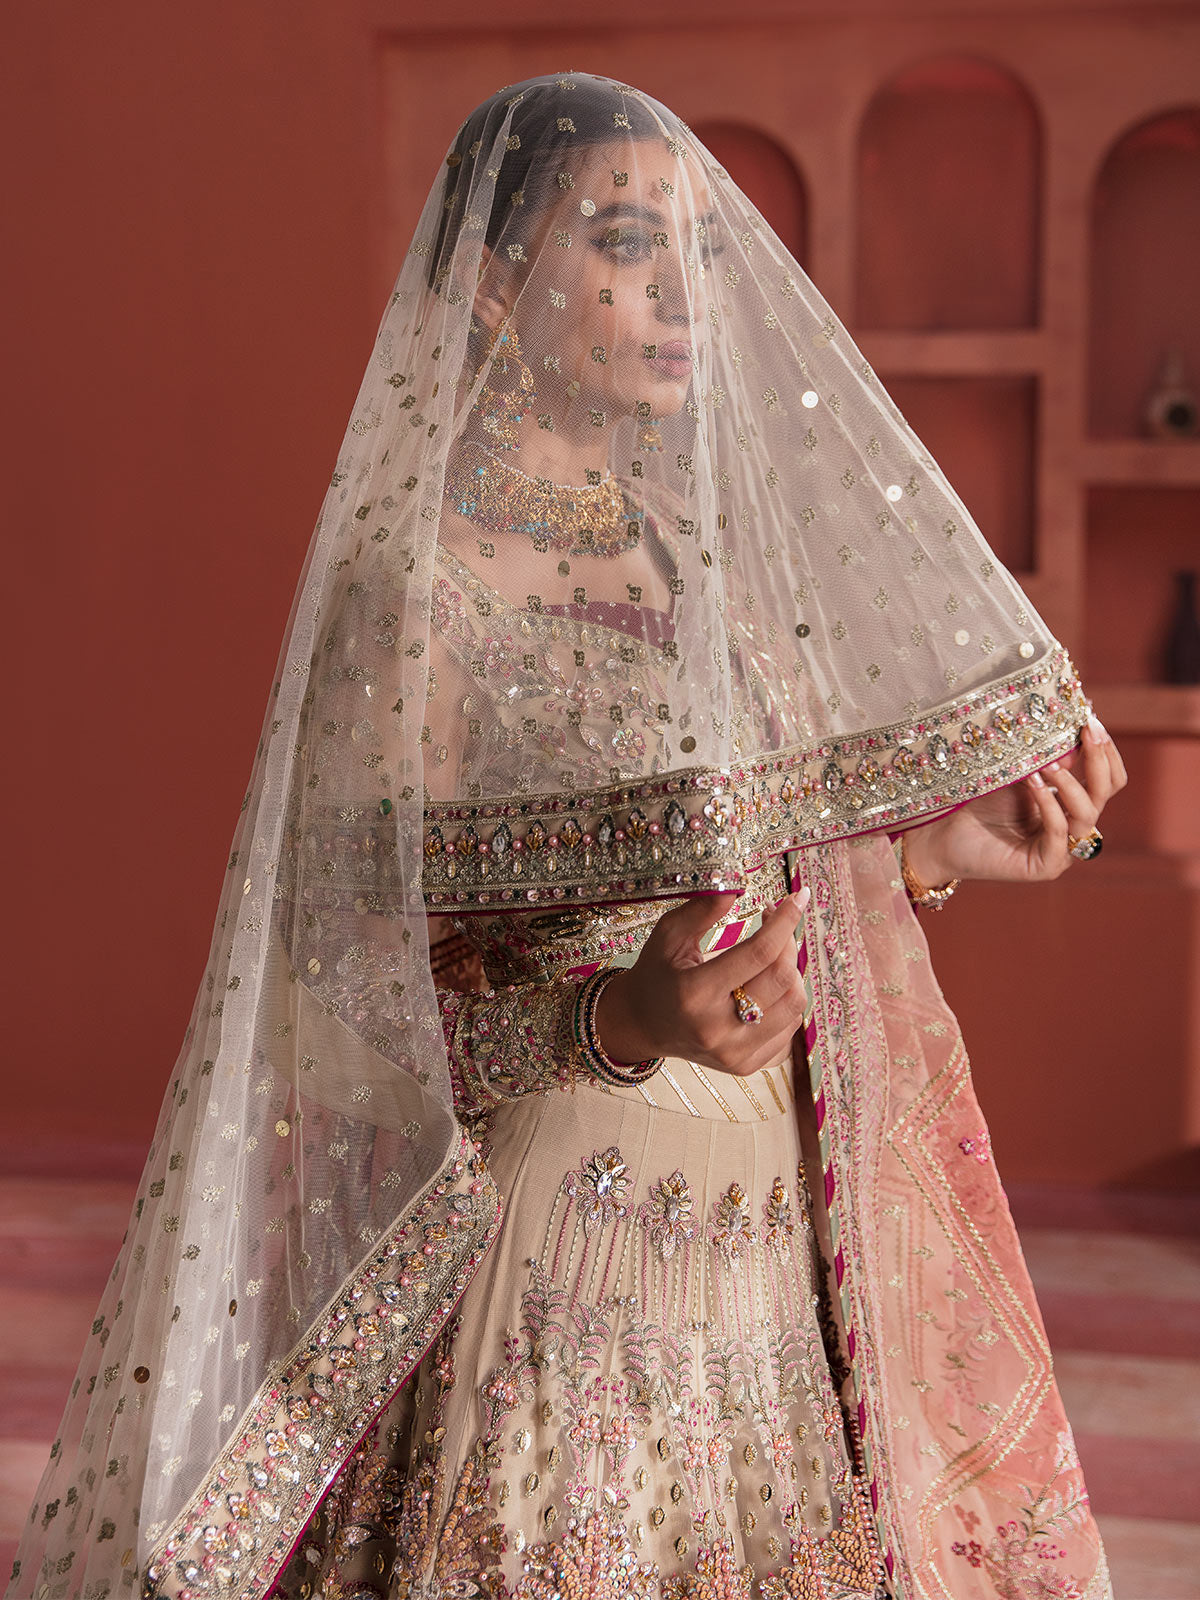 Anshah GL-WS-22V1-28 (Ivory White Lehnga Choli) Zaryaab Wedding Formals Collection by Gulaal